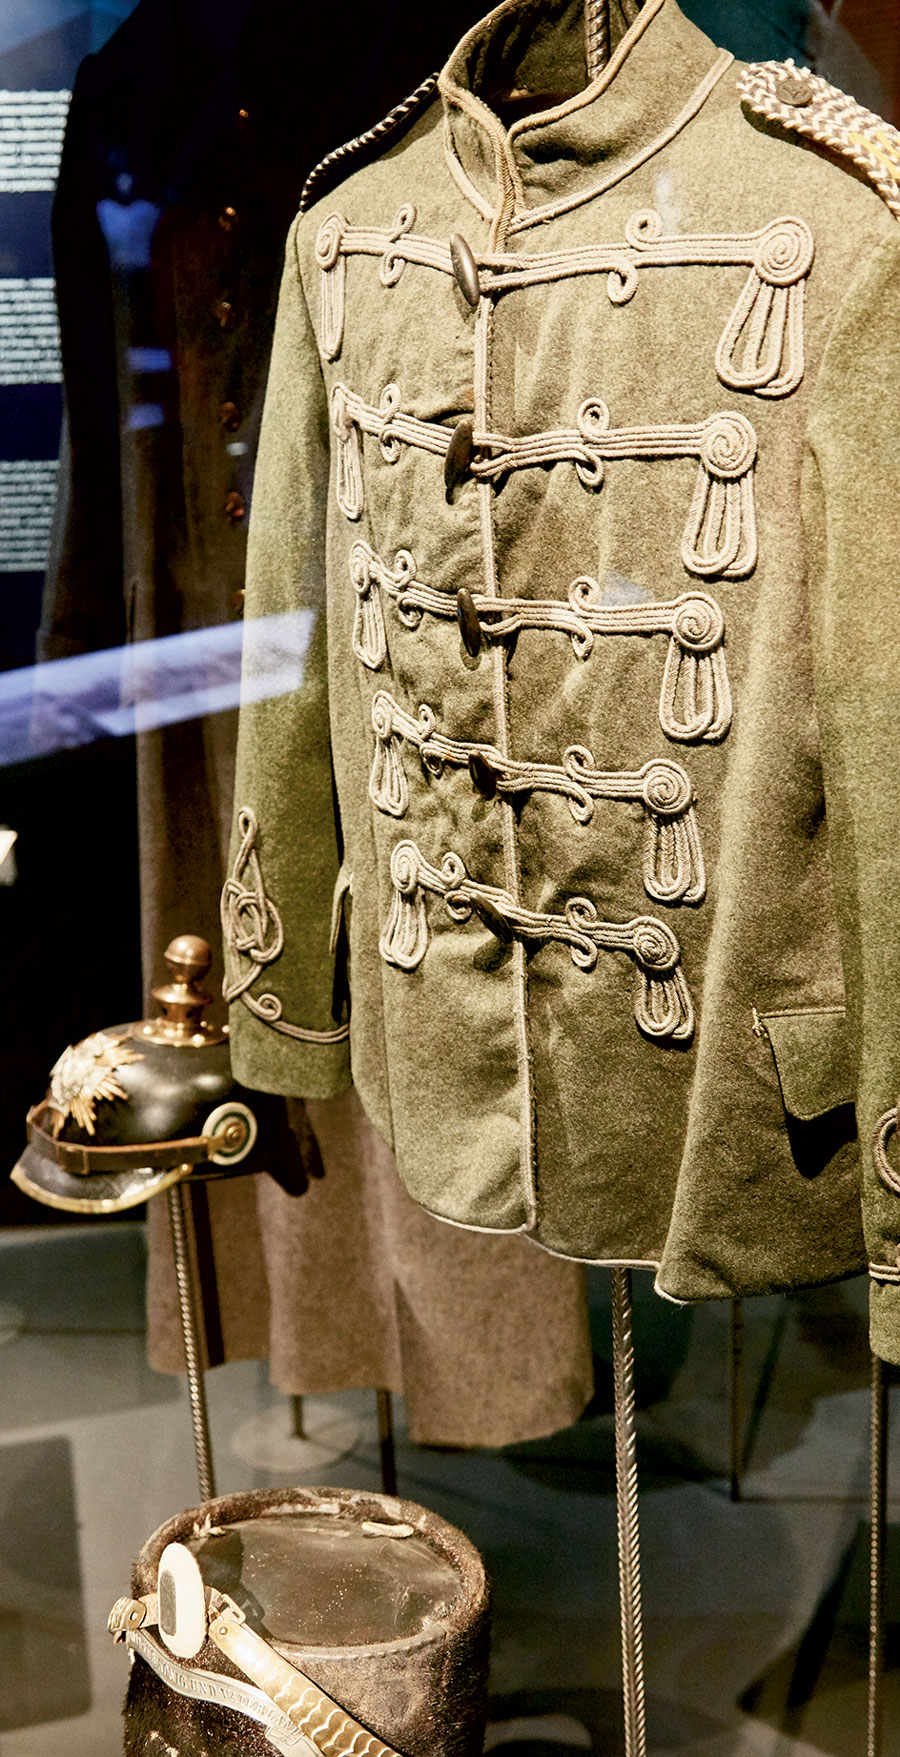 Soldier's uniform on display